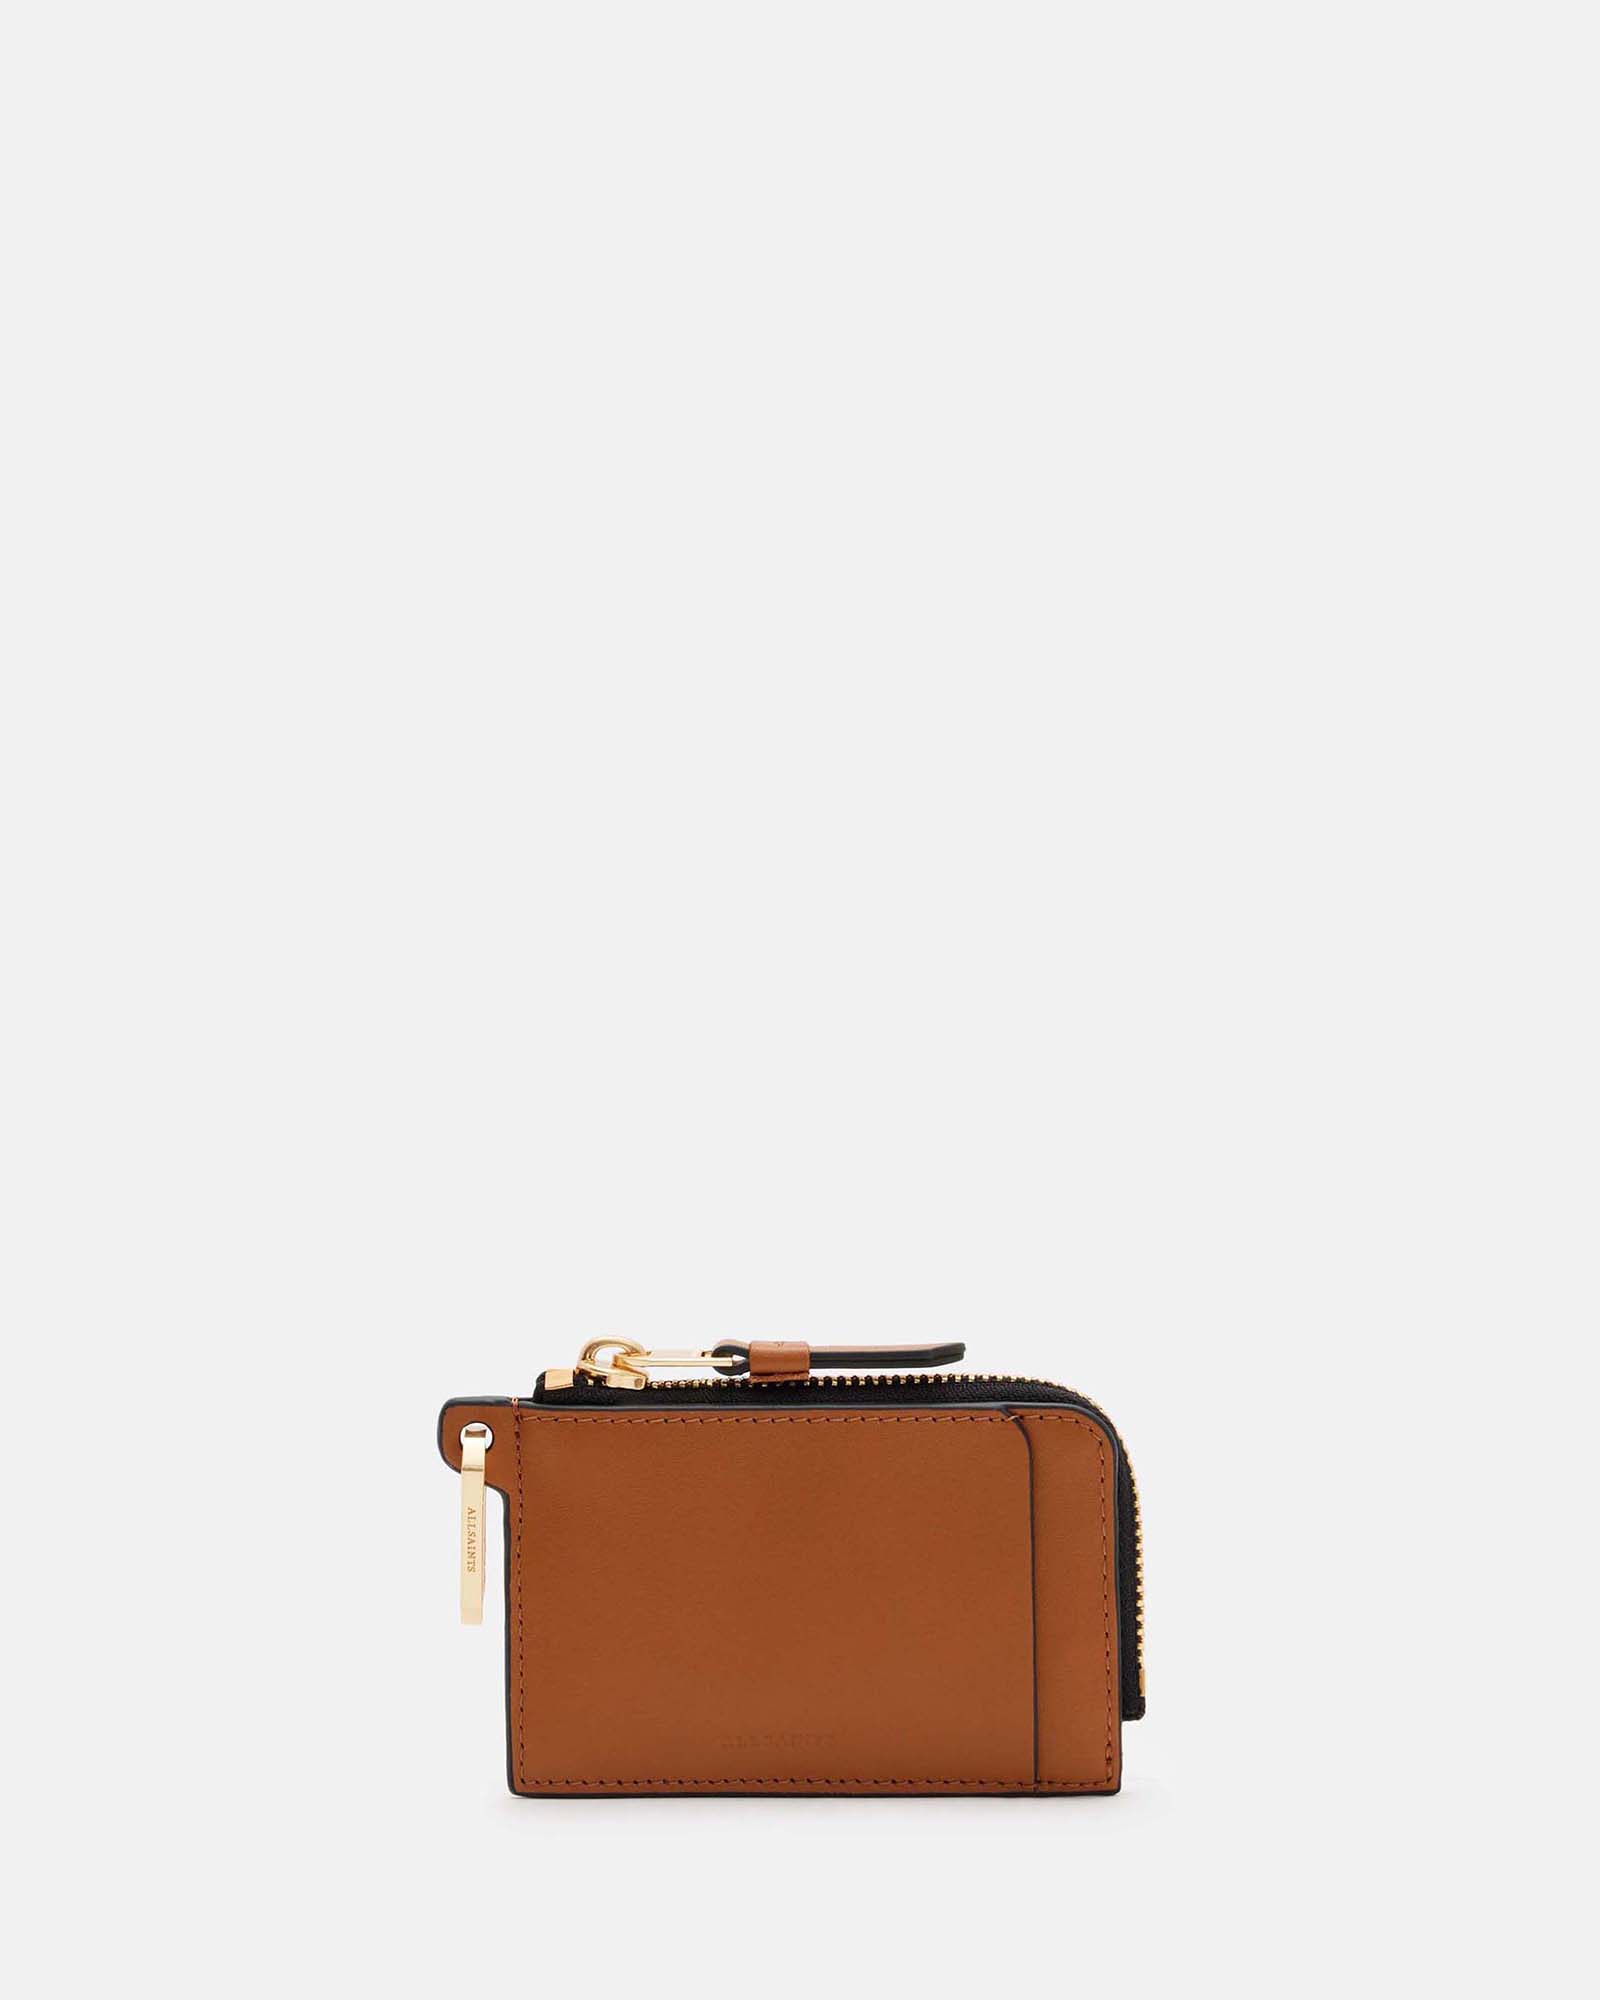 AllSaints Remy Leather Wallet